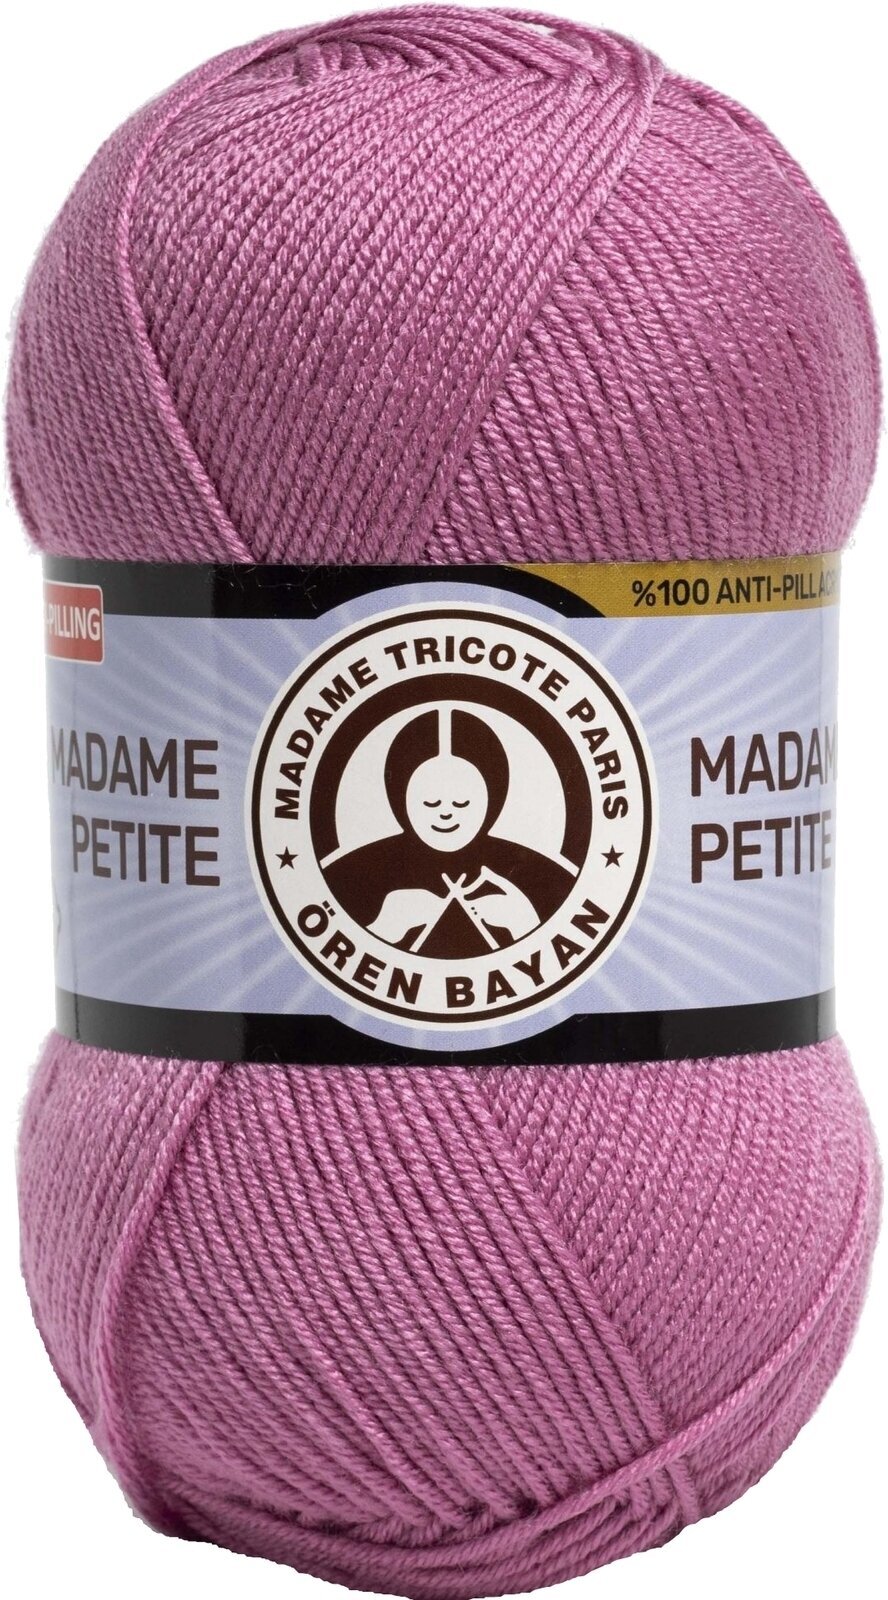 Knitting Yarn Madame Tricote Paris Madame Petite 3848 49 Knitting Yarn